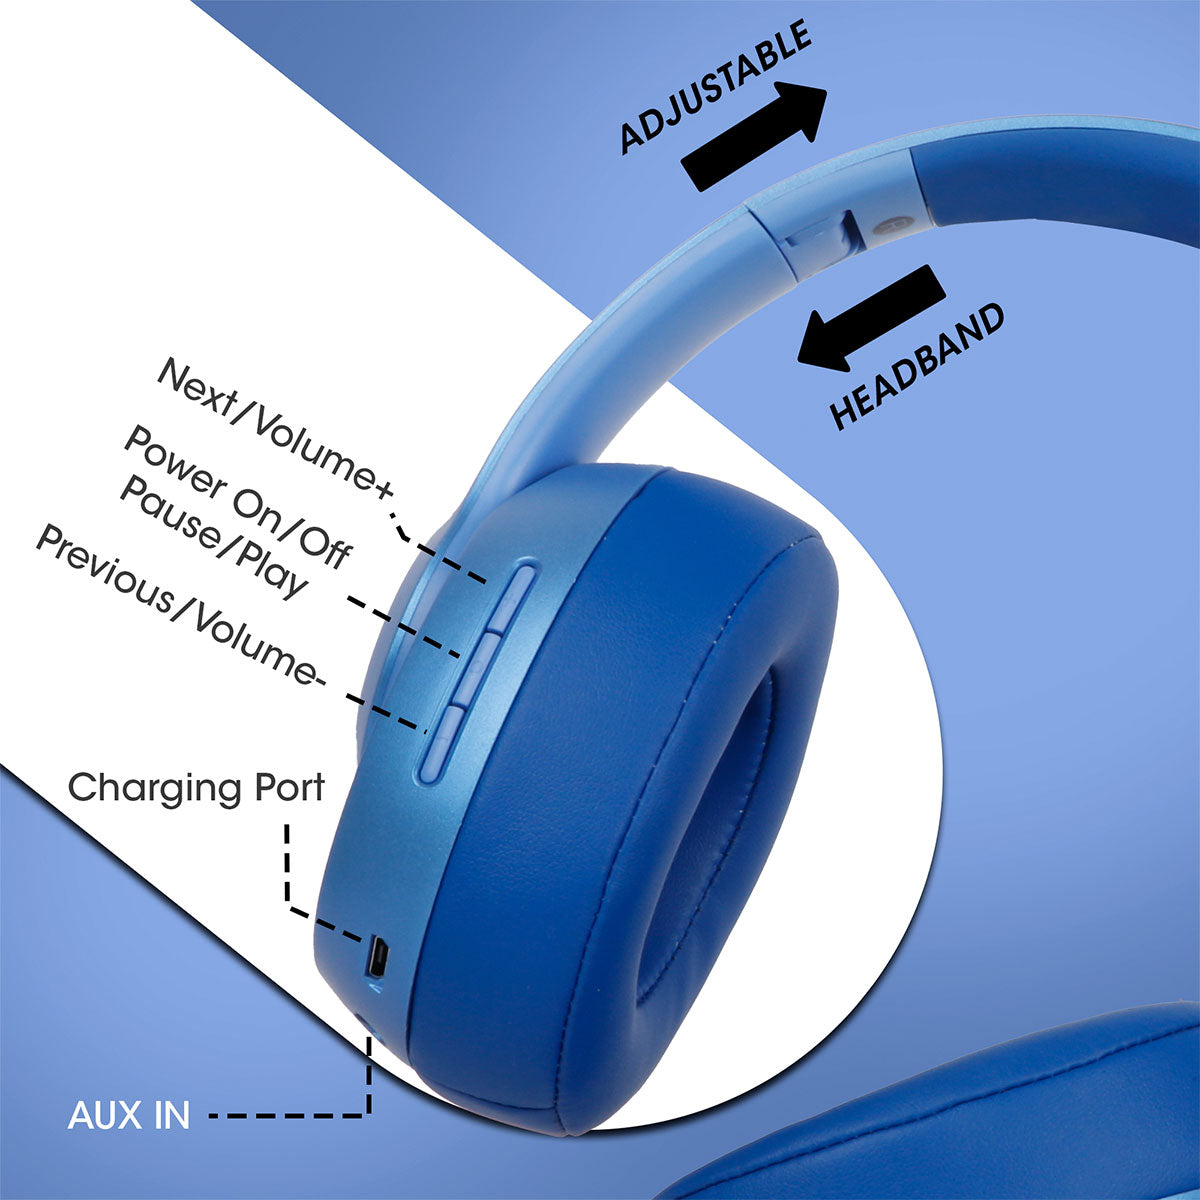 Zeb-Duke 1 - Wireless  Headphone - Zebronics